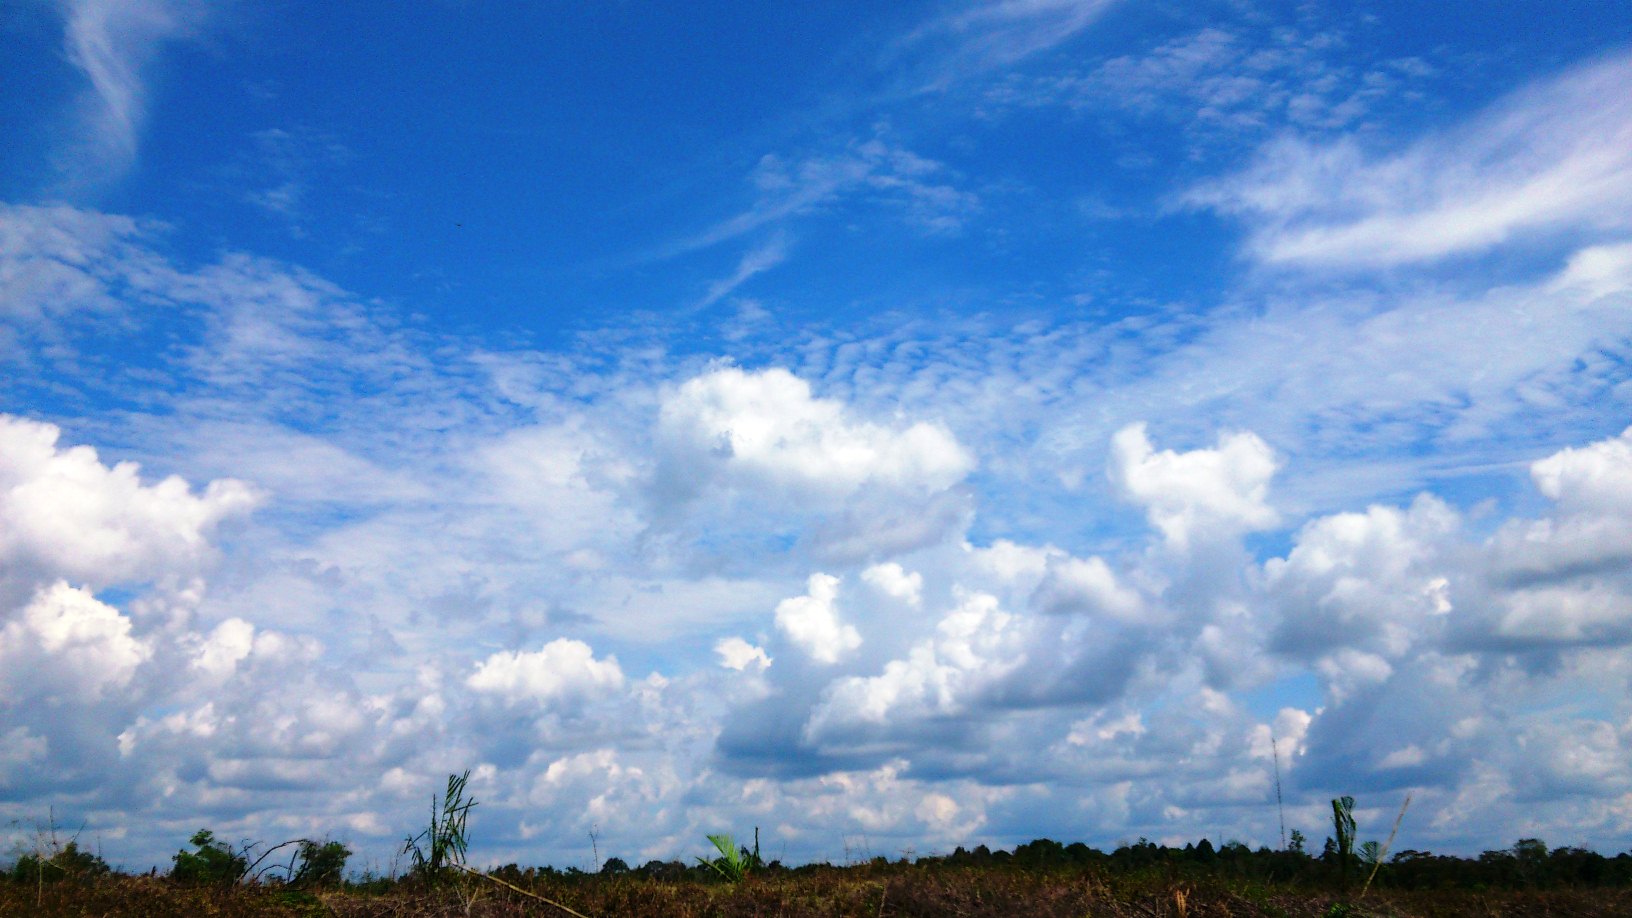 File Mendung di langit  biru  57 JPG Wikimedia Commons